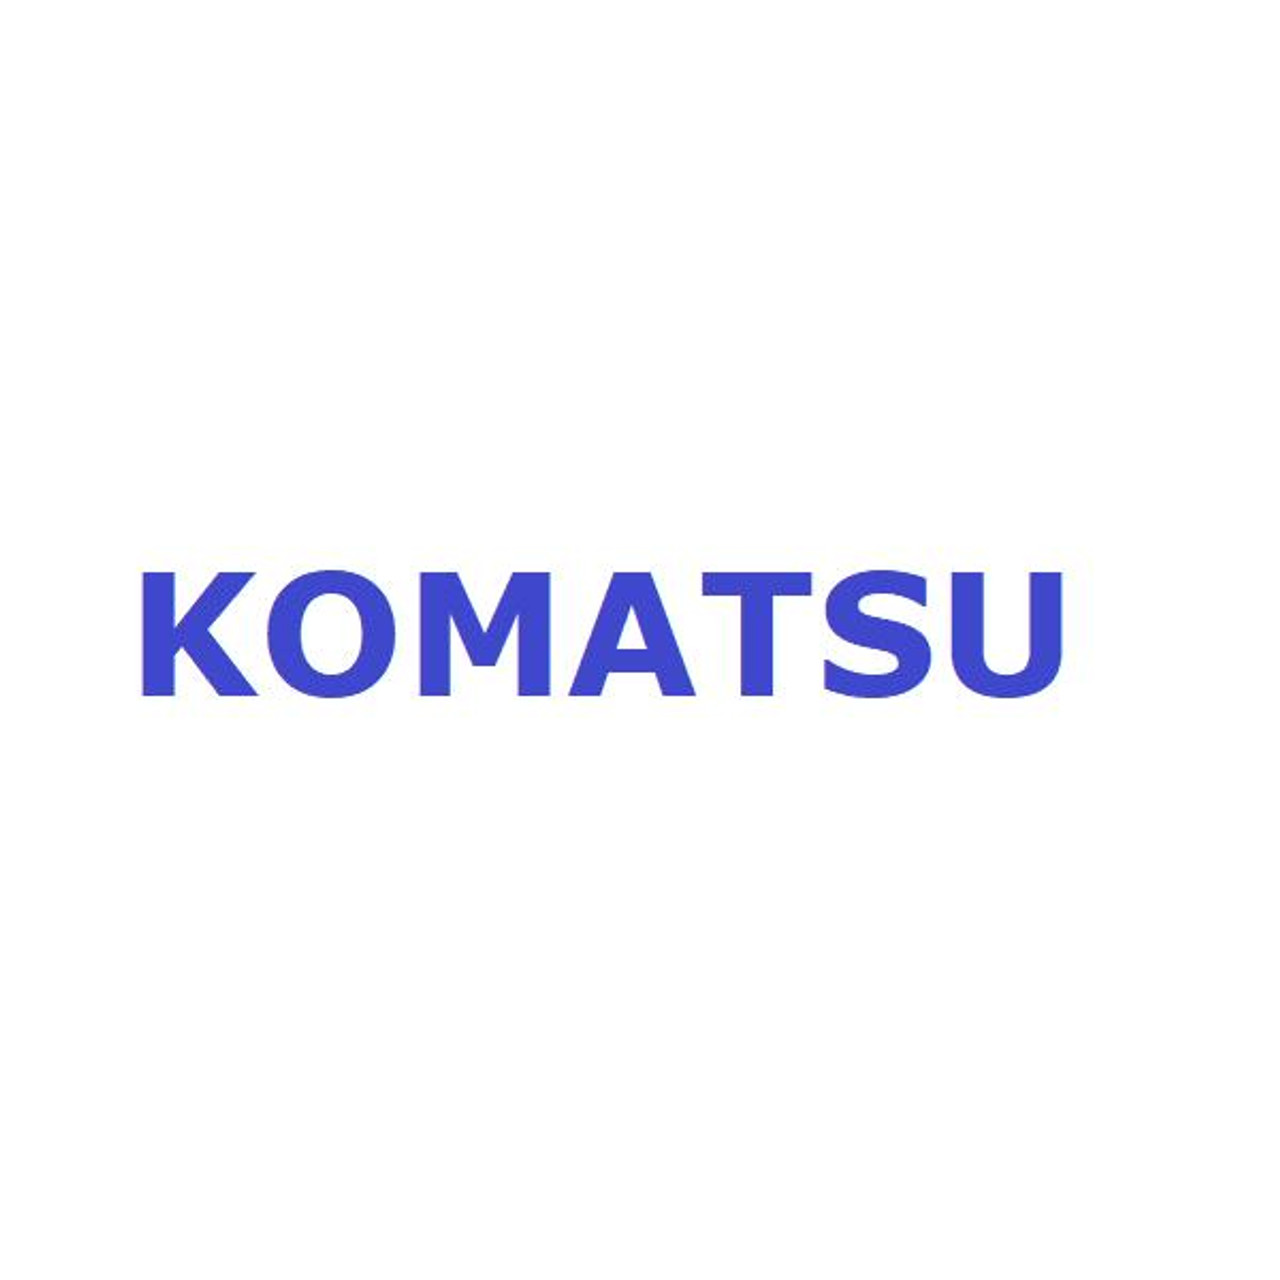 Komatsu Seal # AK4773 Hoist Cylinder 930E-4